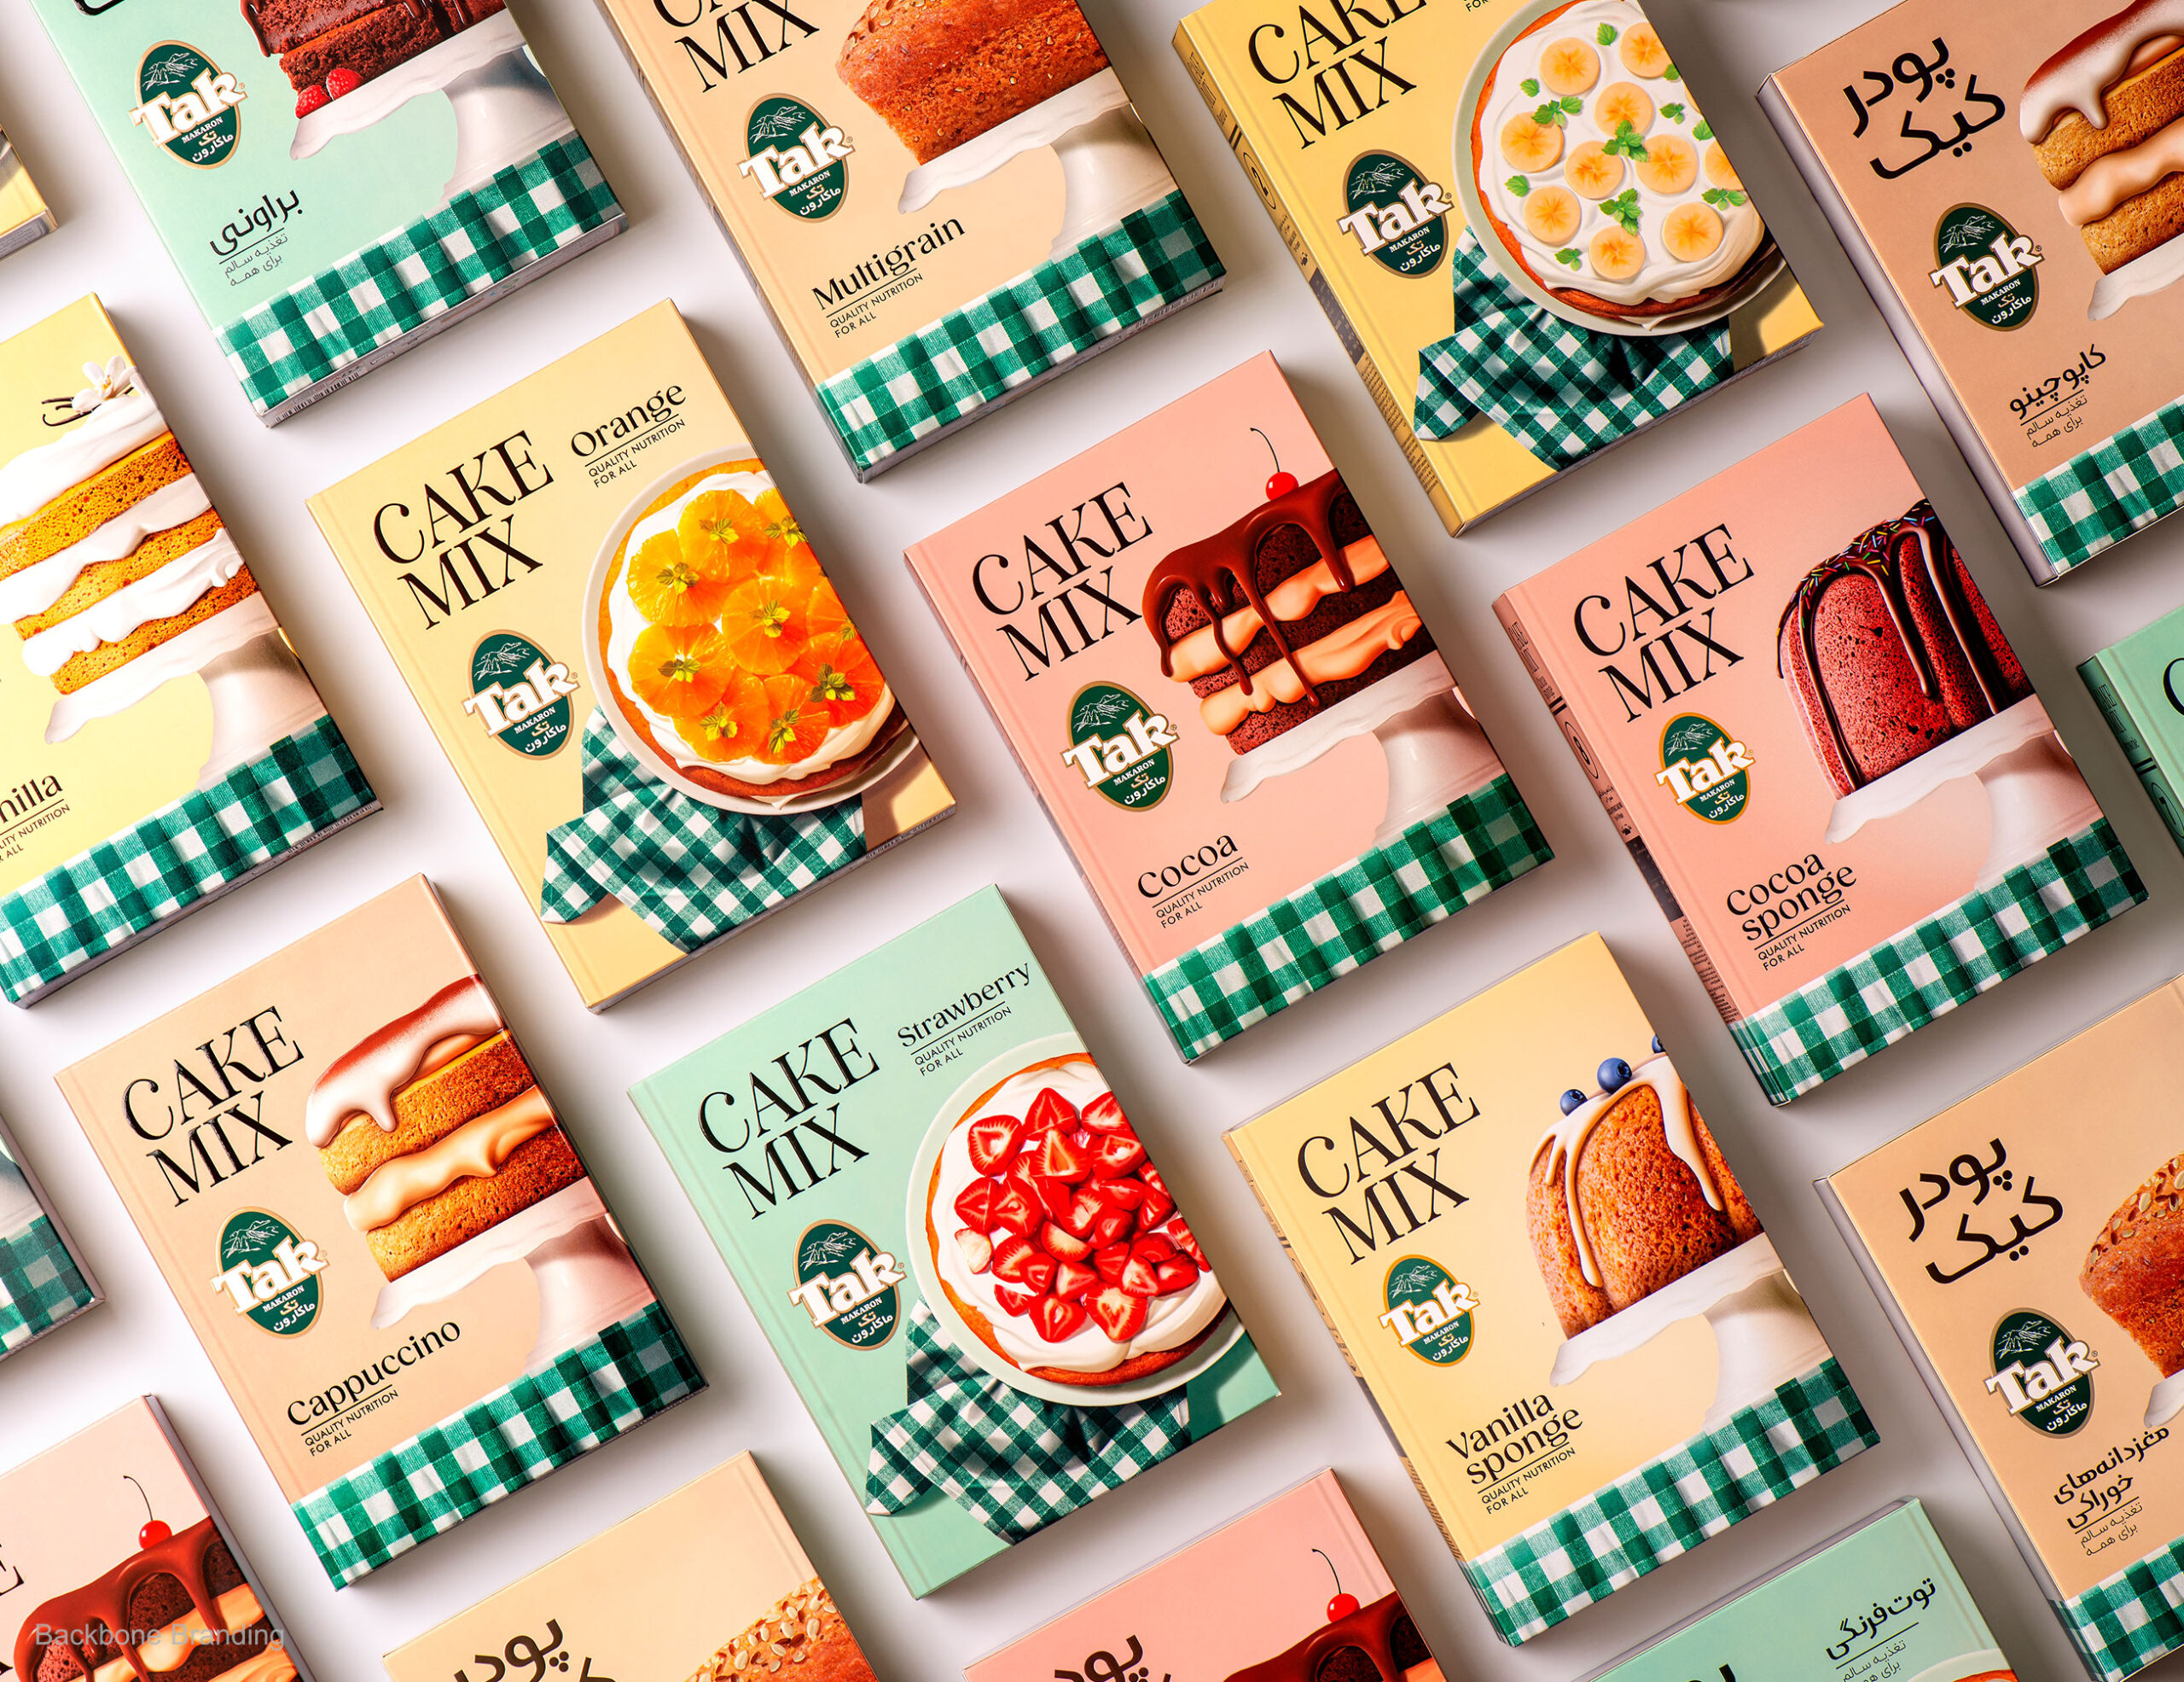 Tak Cake mix packaging design and rebranding by Backbone Branding